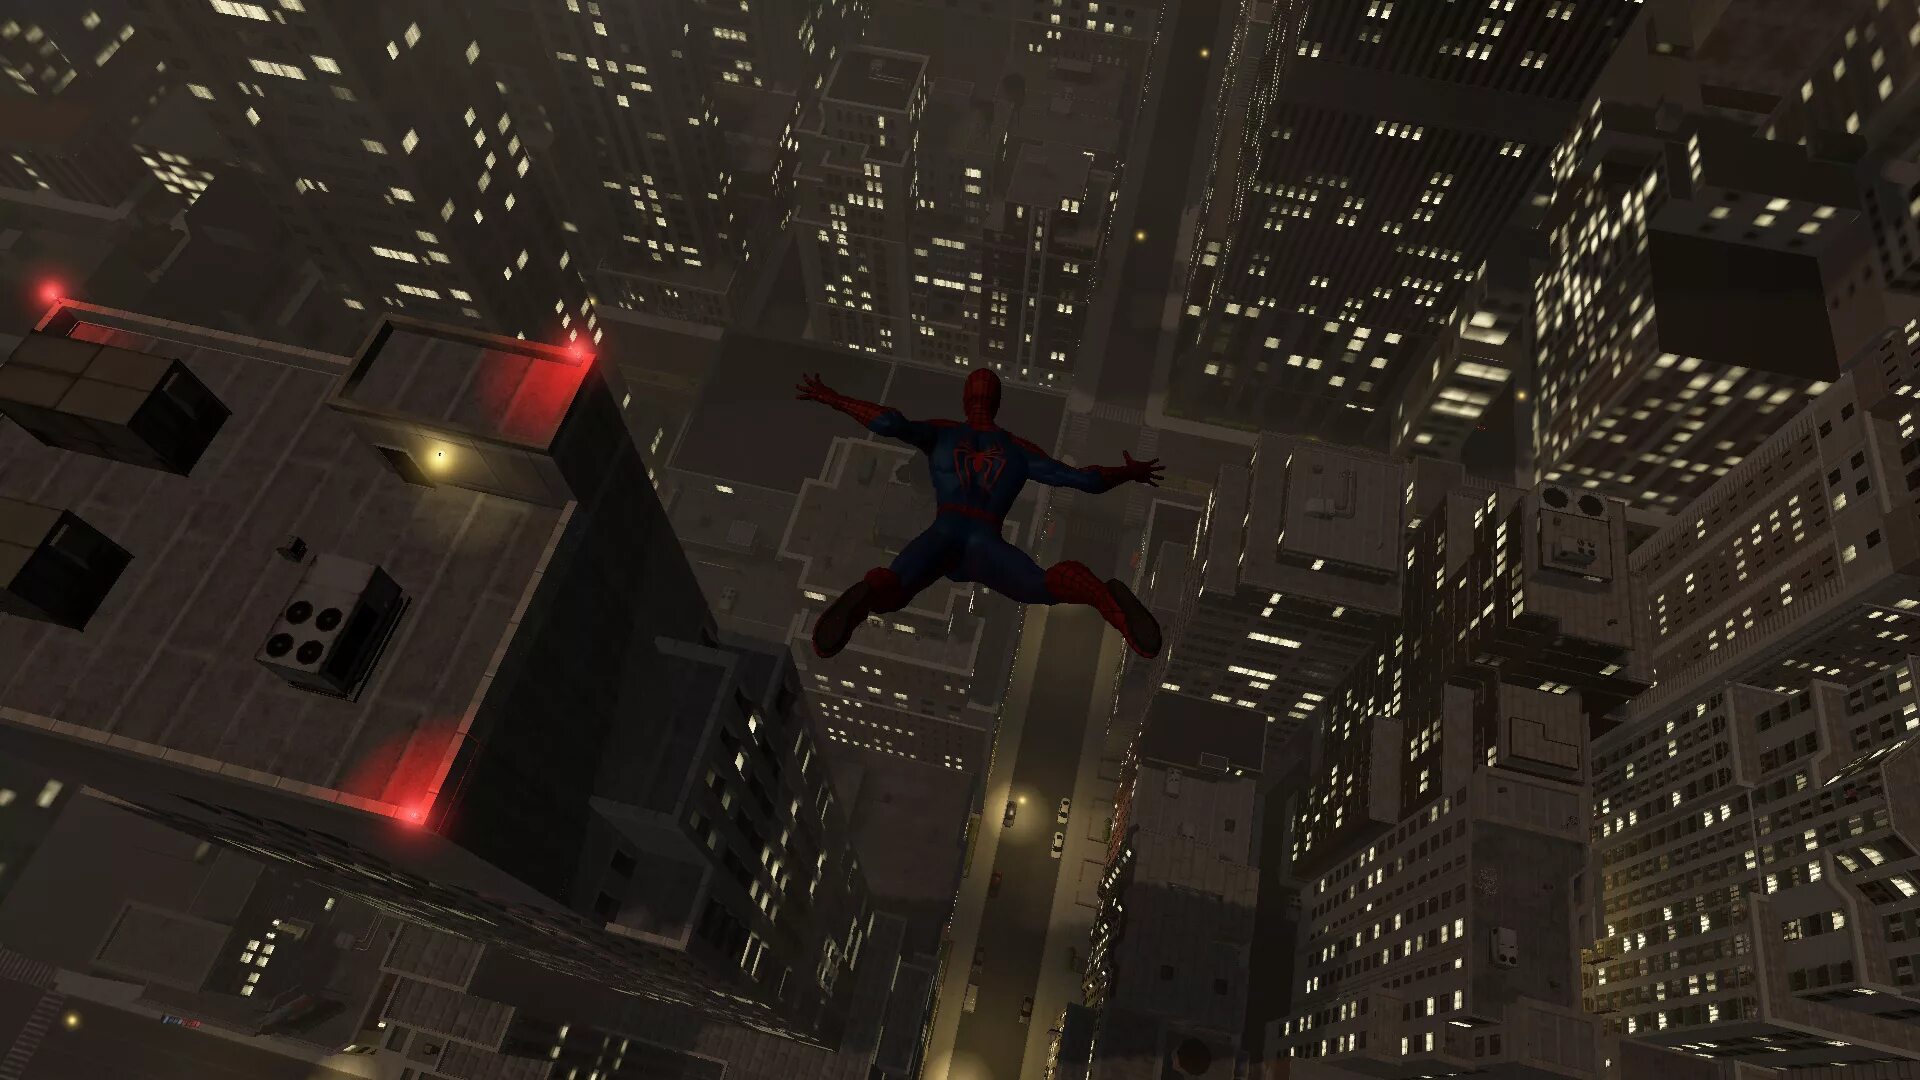 Бесплатная игра человек паук 2. The amazing Spider-man 2 игра. Человек паук амазинг 2 игра. The amazing Spider-man игра 2014. Spider man 2014 игра.